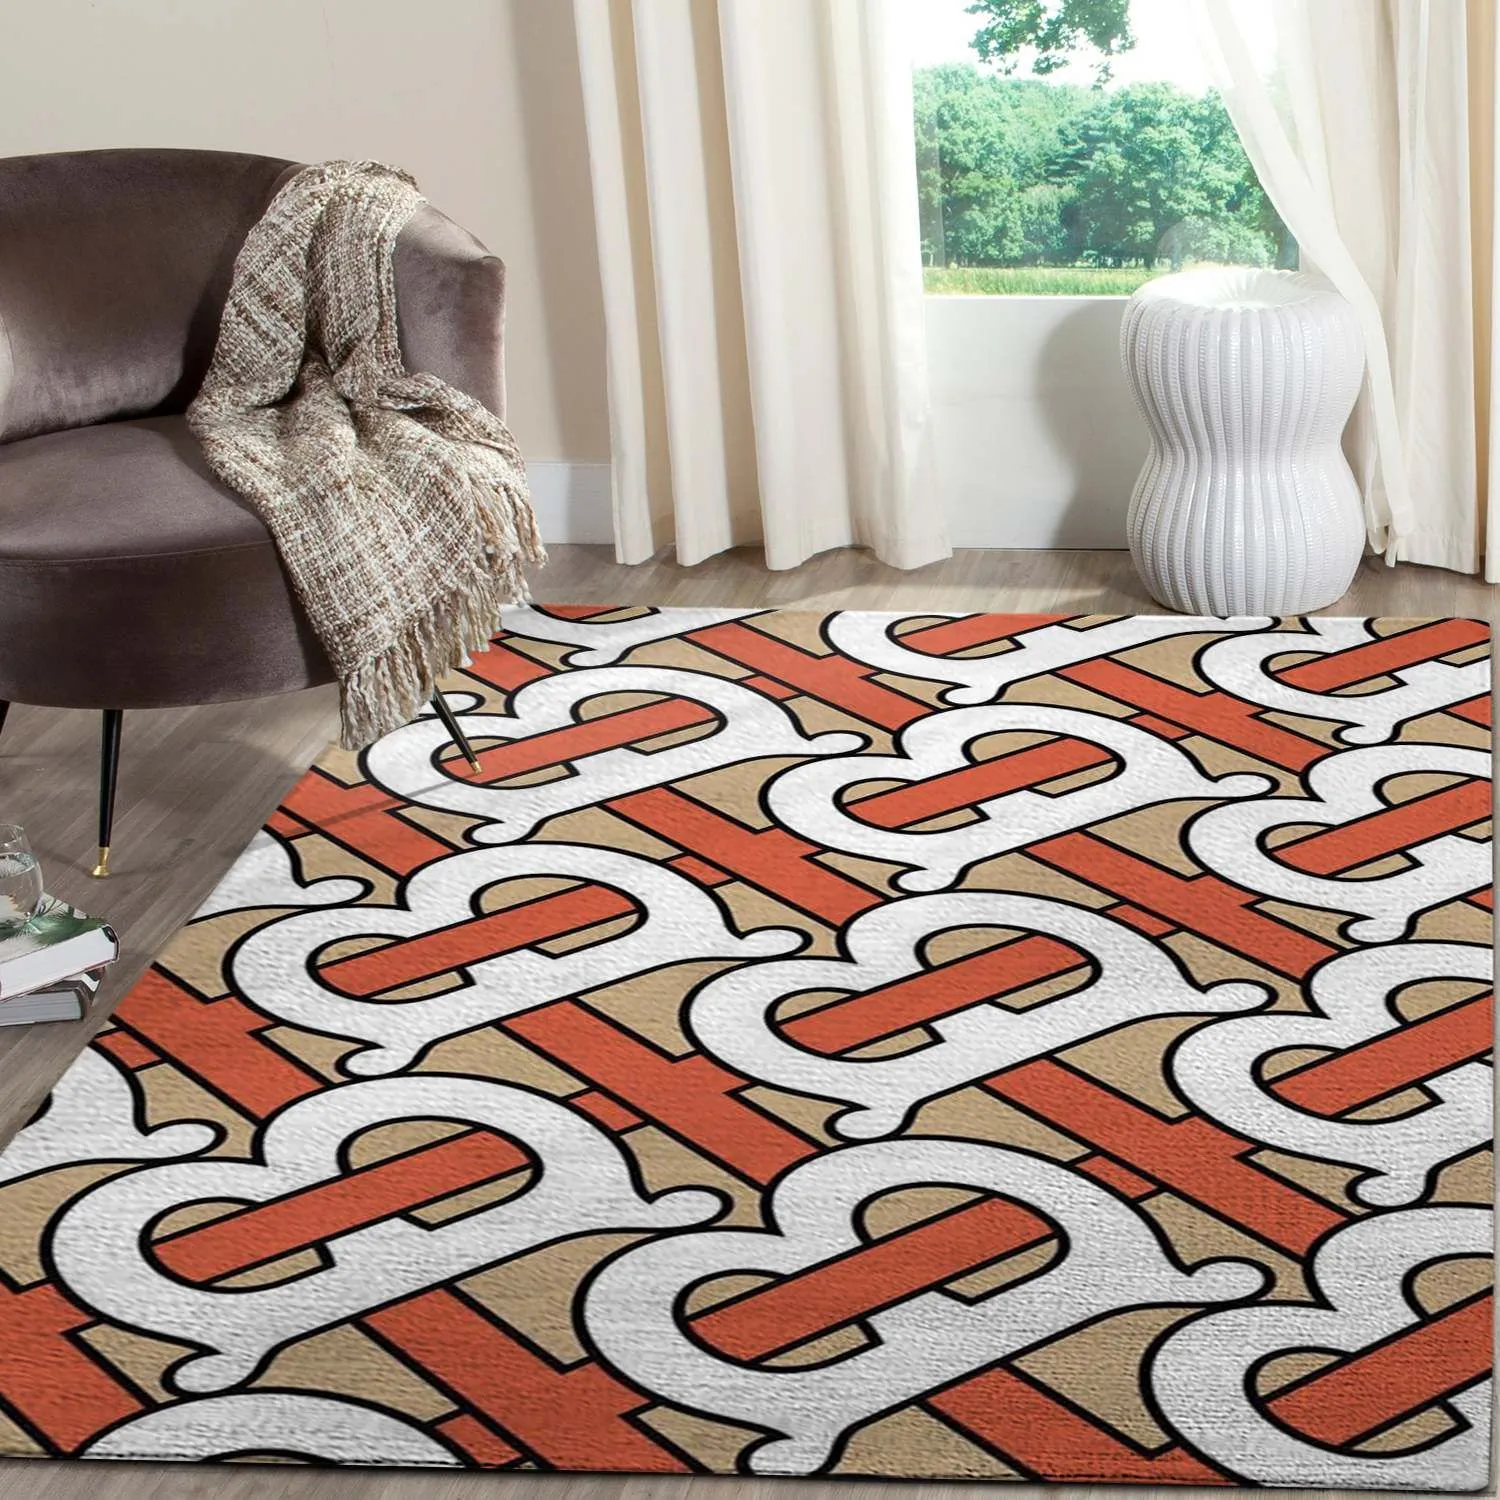 Burberry Rectangle Rug Area Carpet Fashion Brand Door Mat Home Decor Luxury